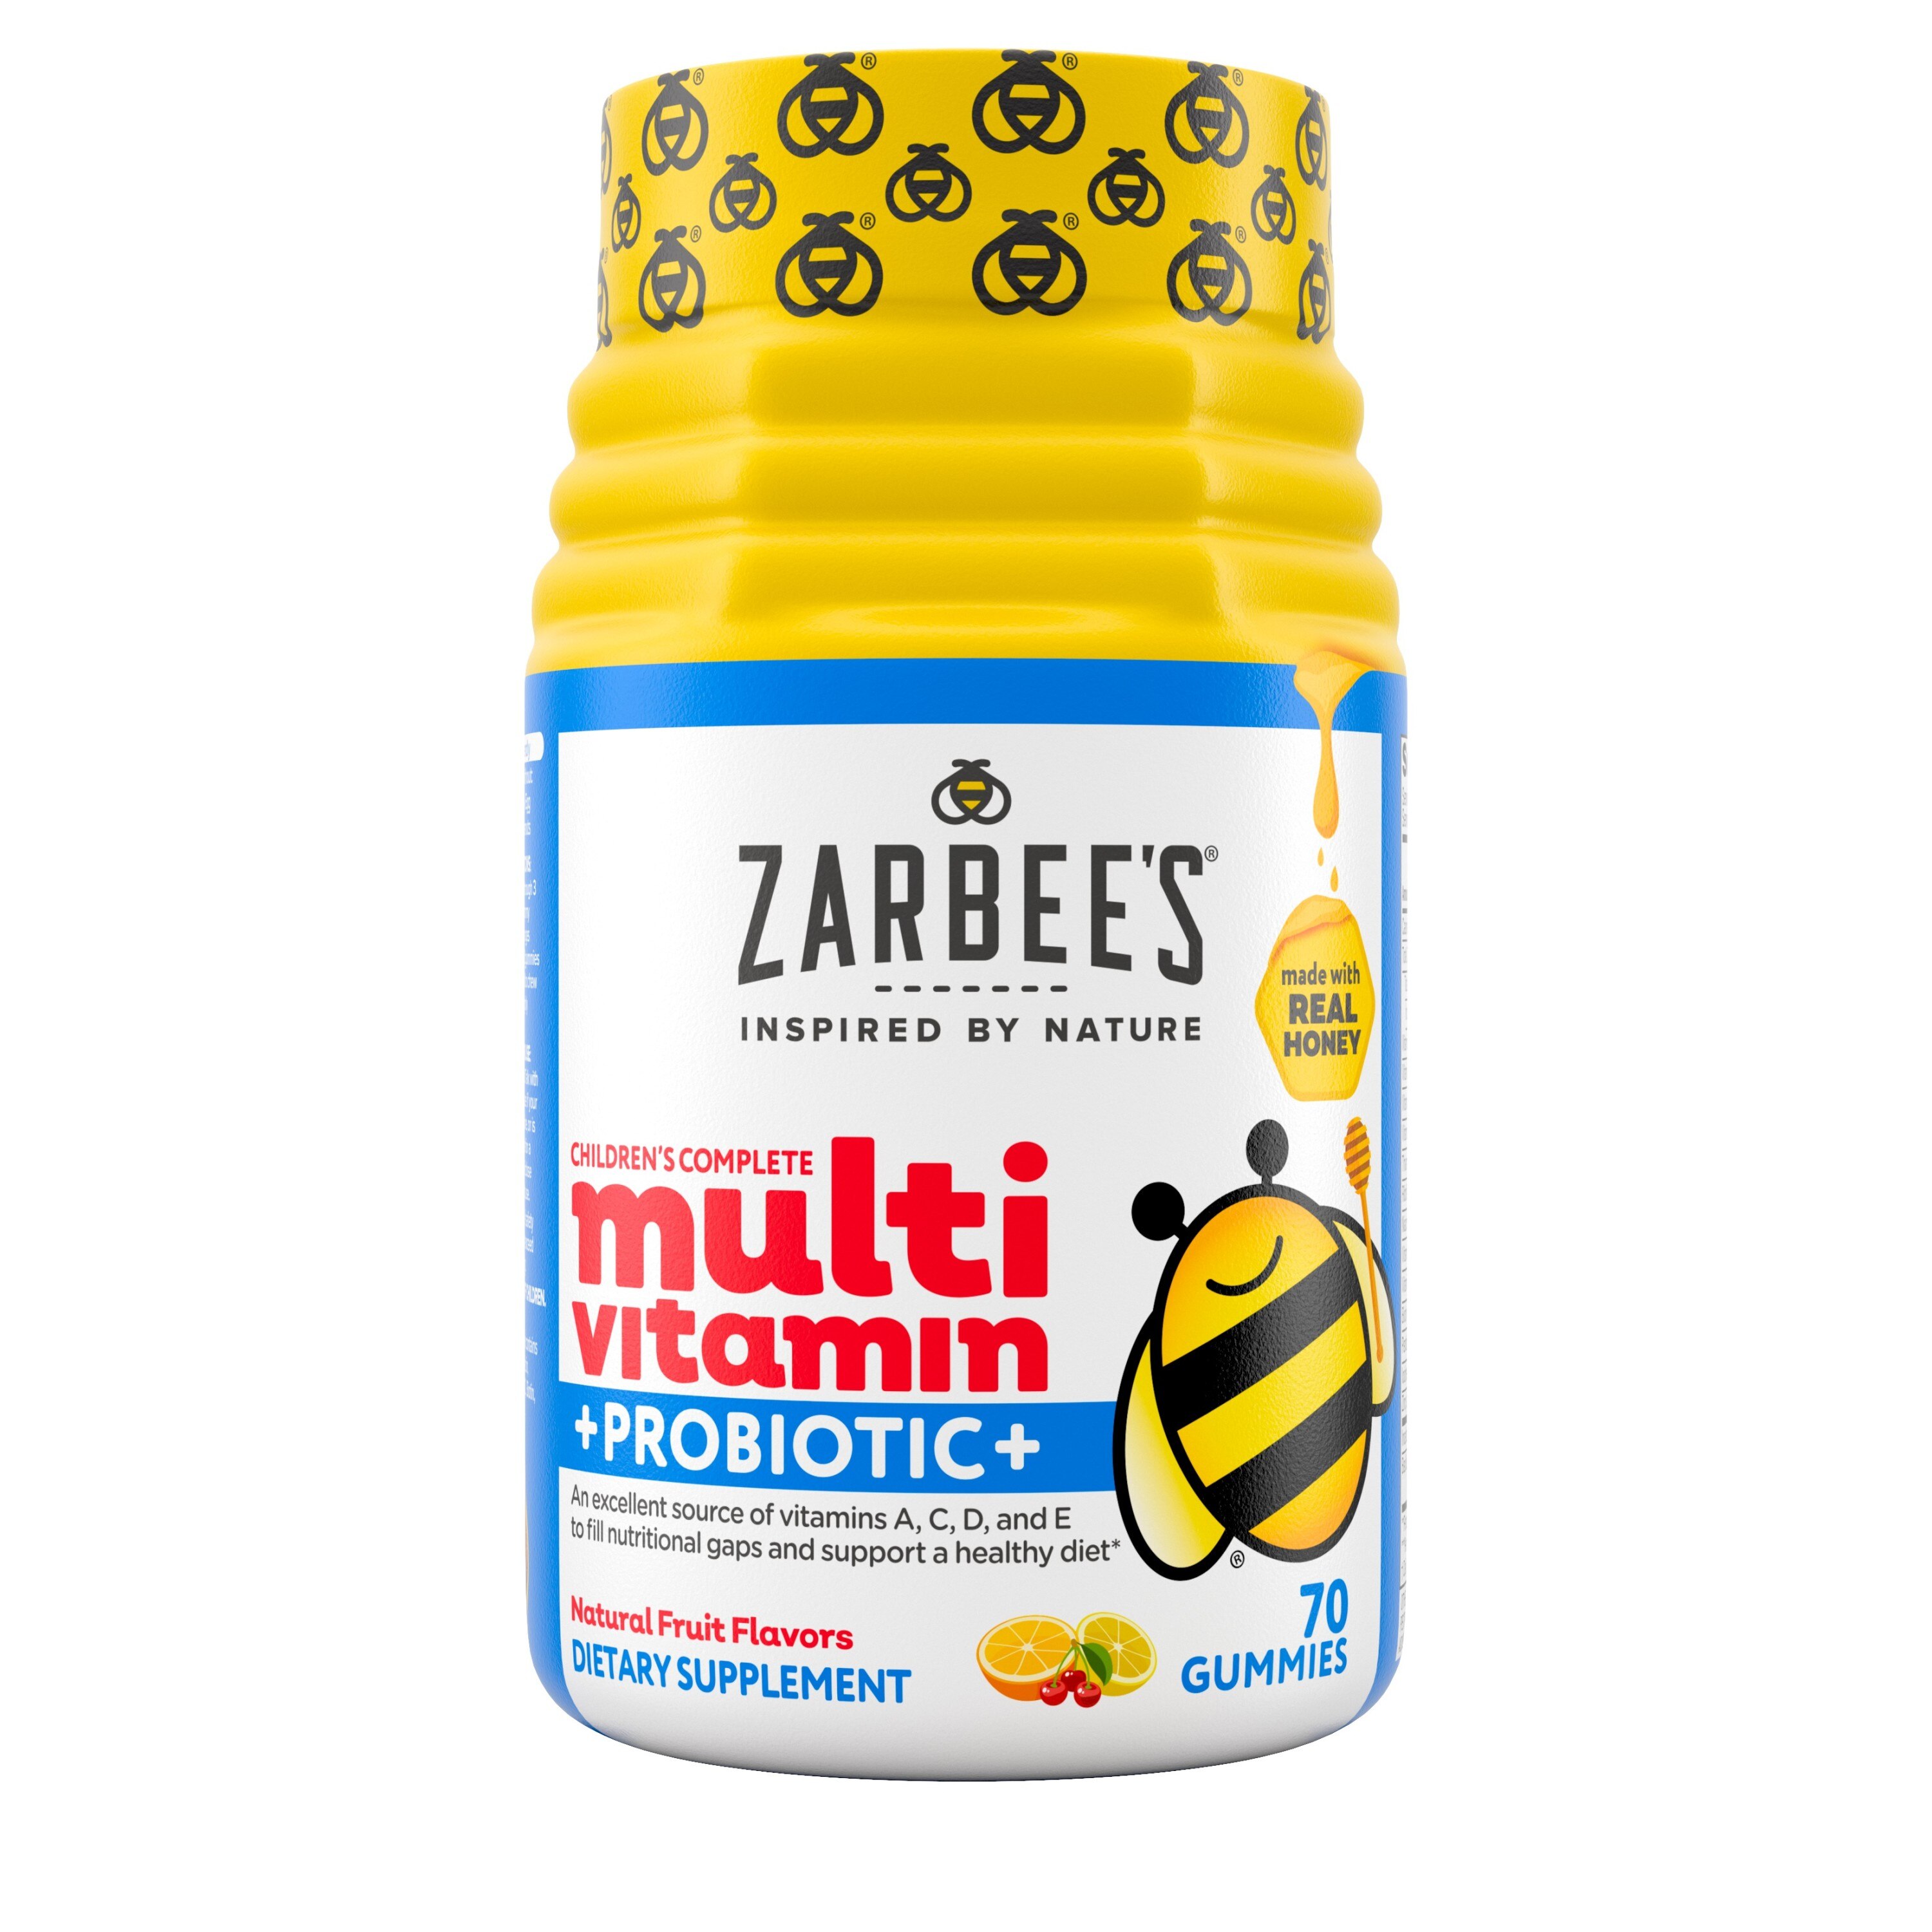 Zarbee's Kid's Complete Multivitamin + Probiotic Gummies, Vitamins A,B,C,D,E, Fruit Flavor, 70 CT